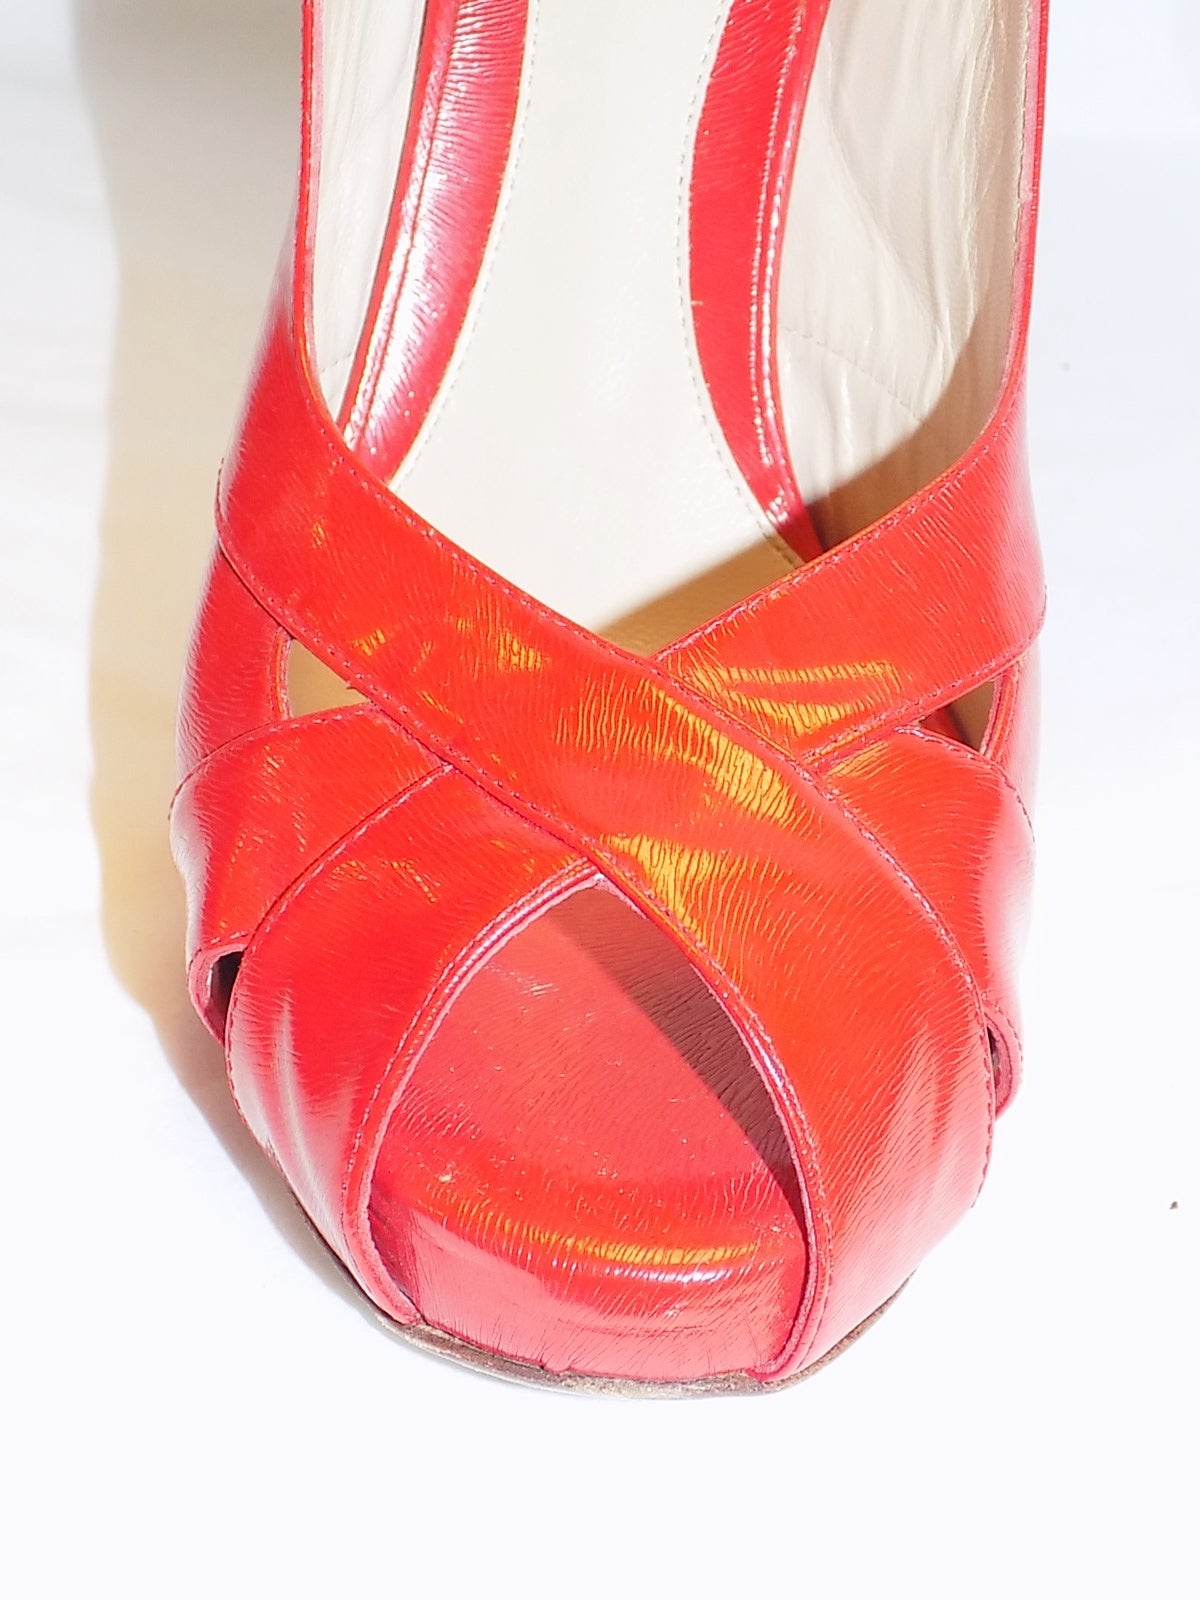 FENDI Fabulous Sexy RED  sandals shoes  sz 38 1